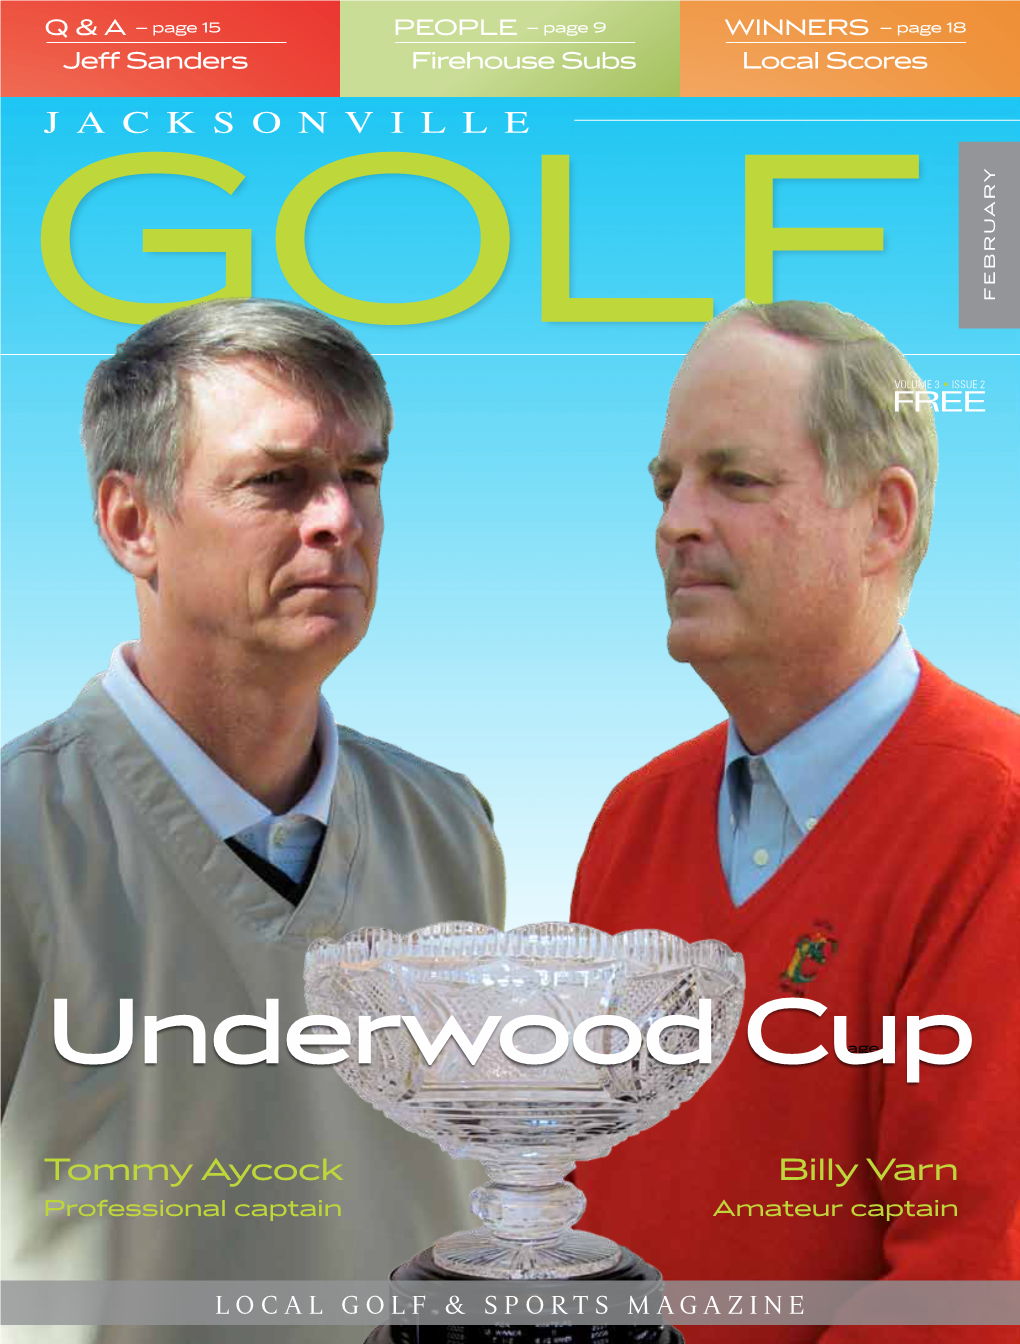 Underwood Cuppage 6